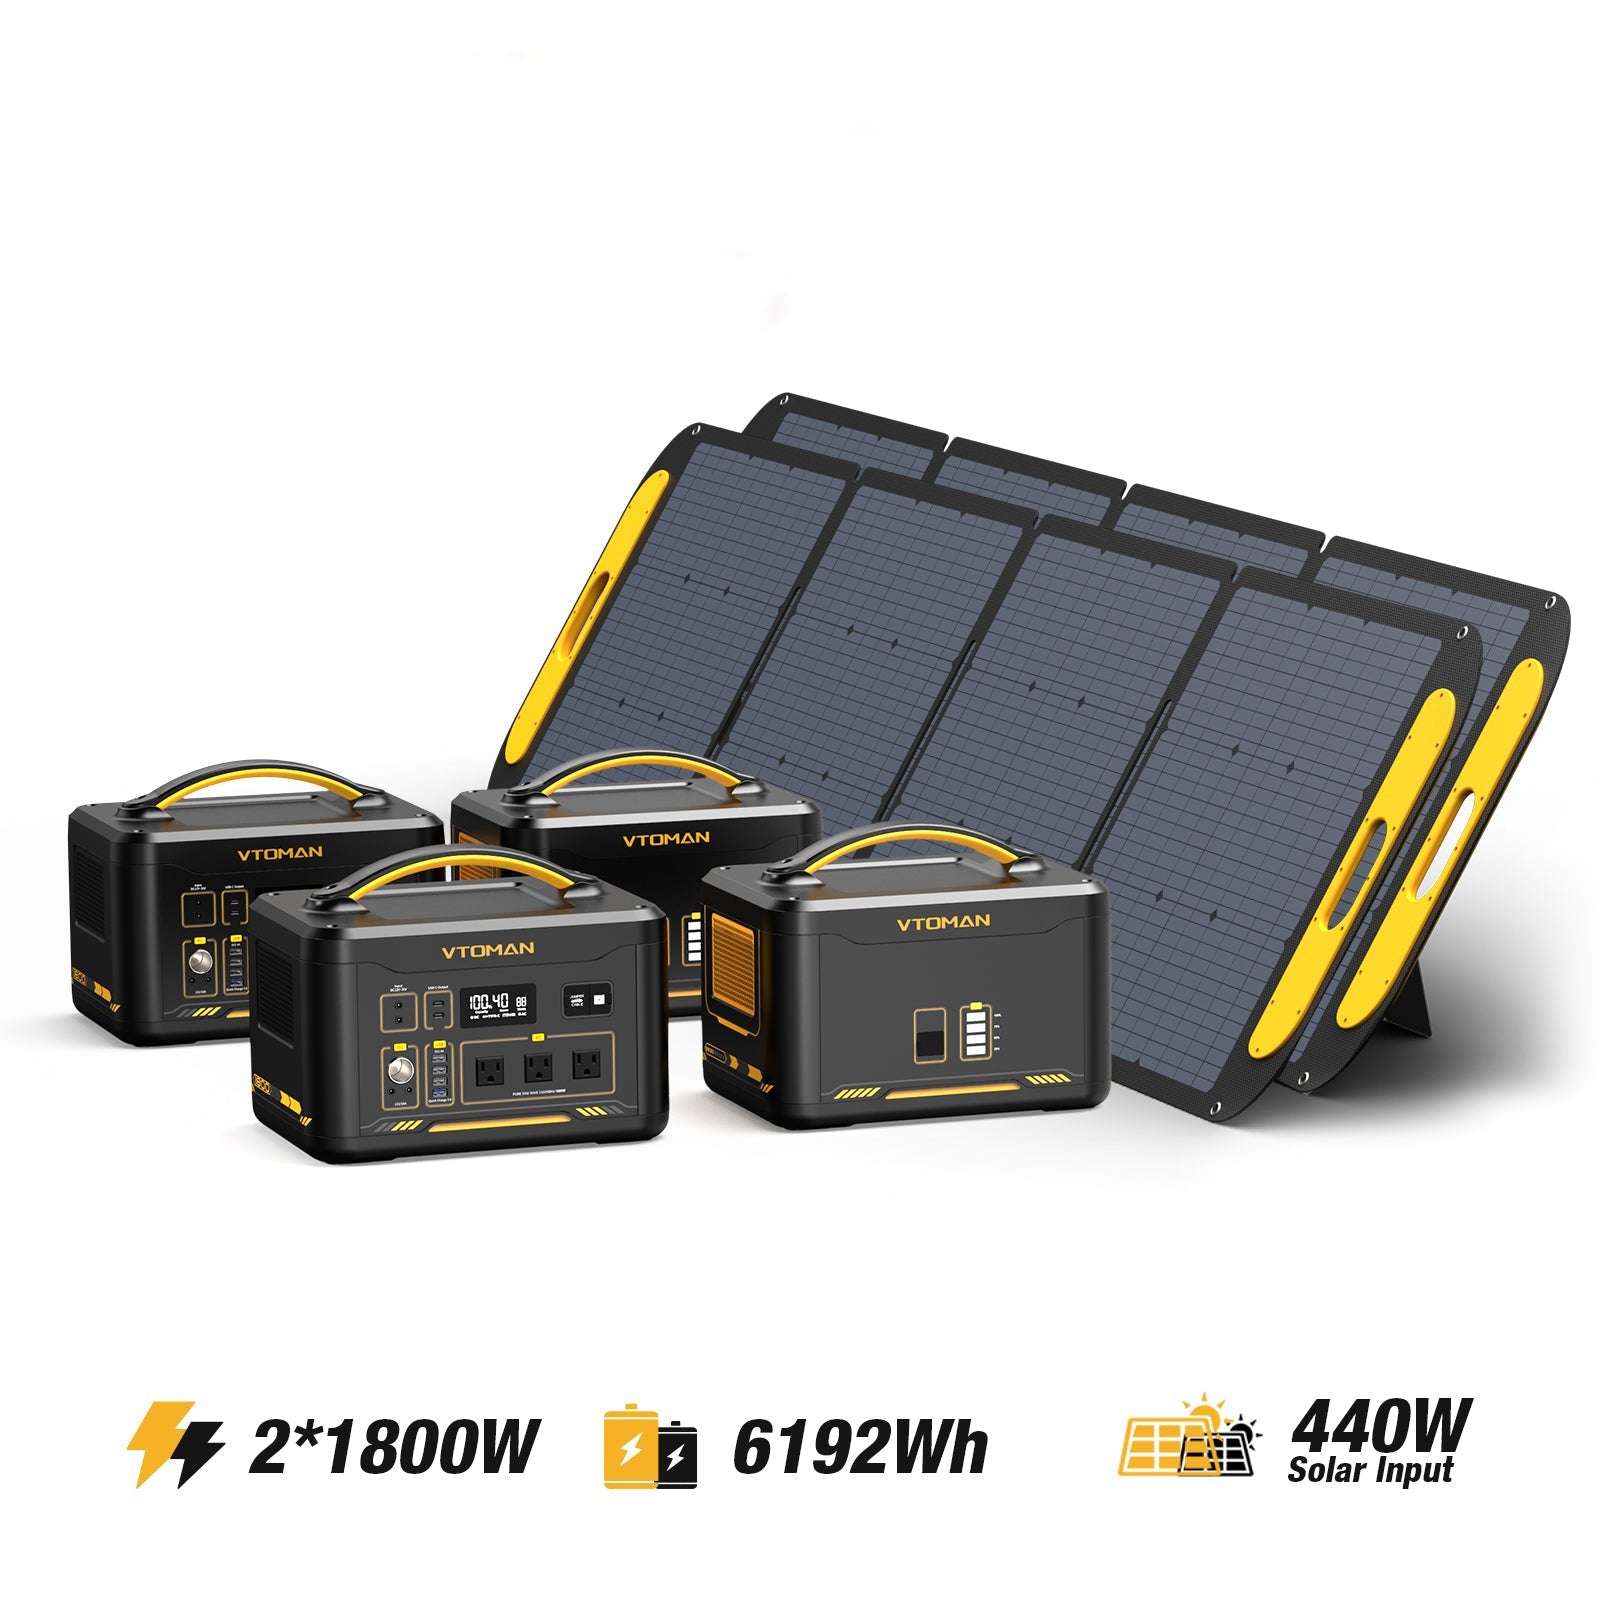 jump 1800W/6192Wh 440W Solar Generator